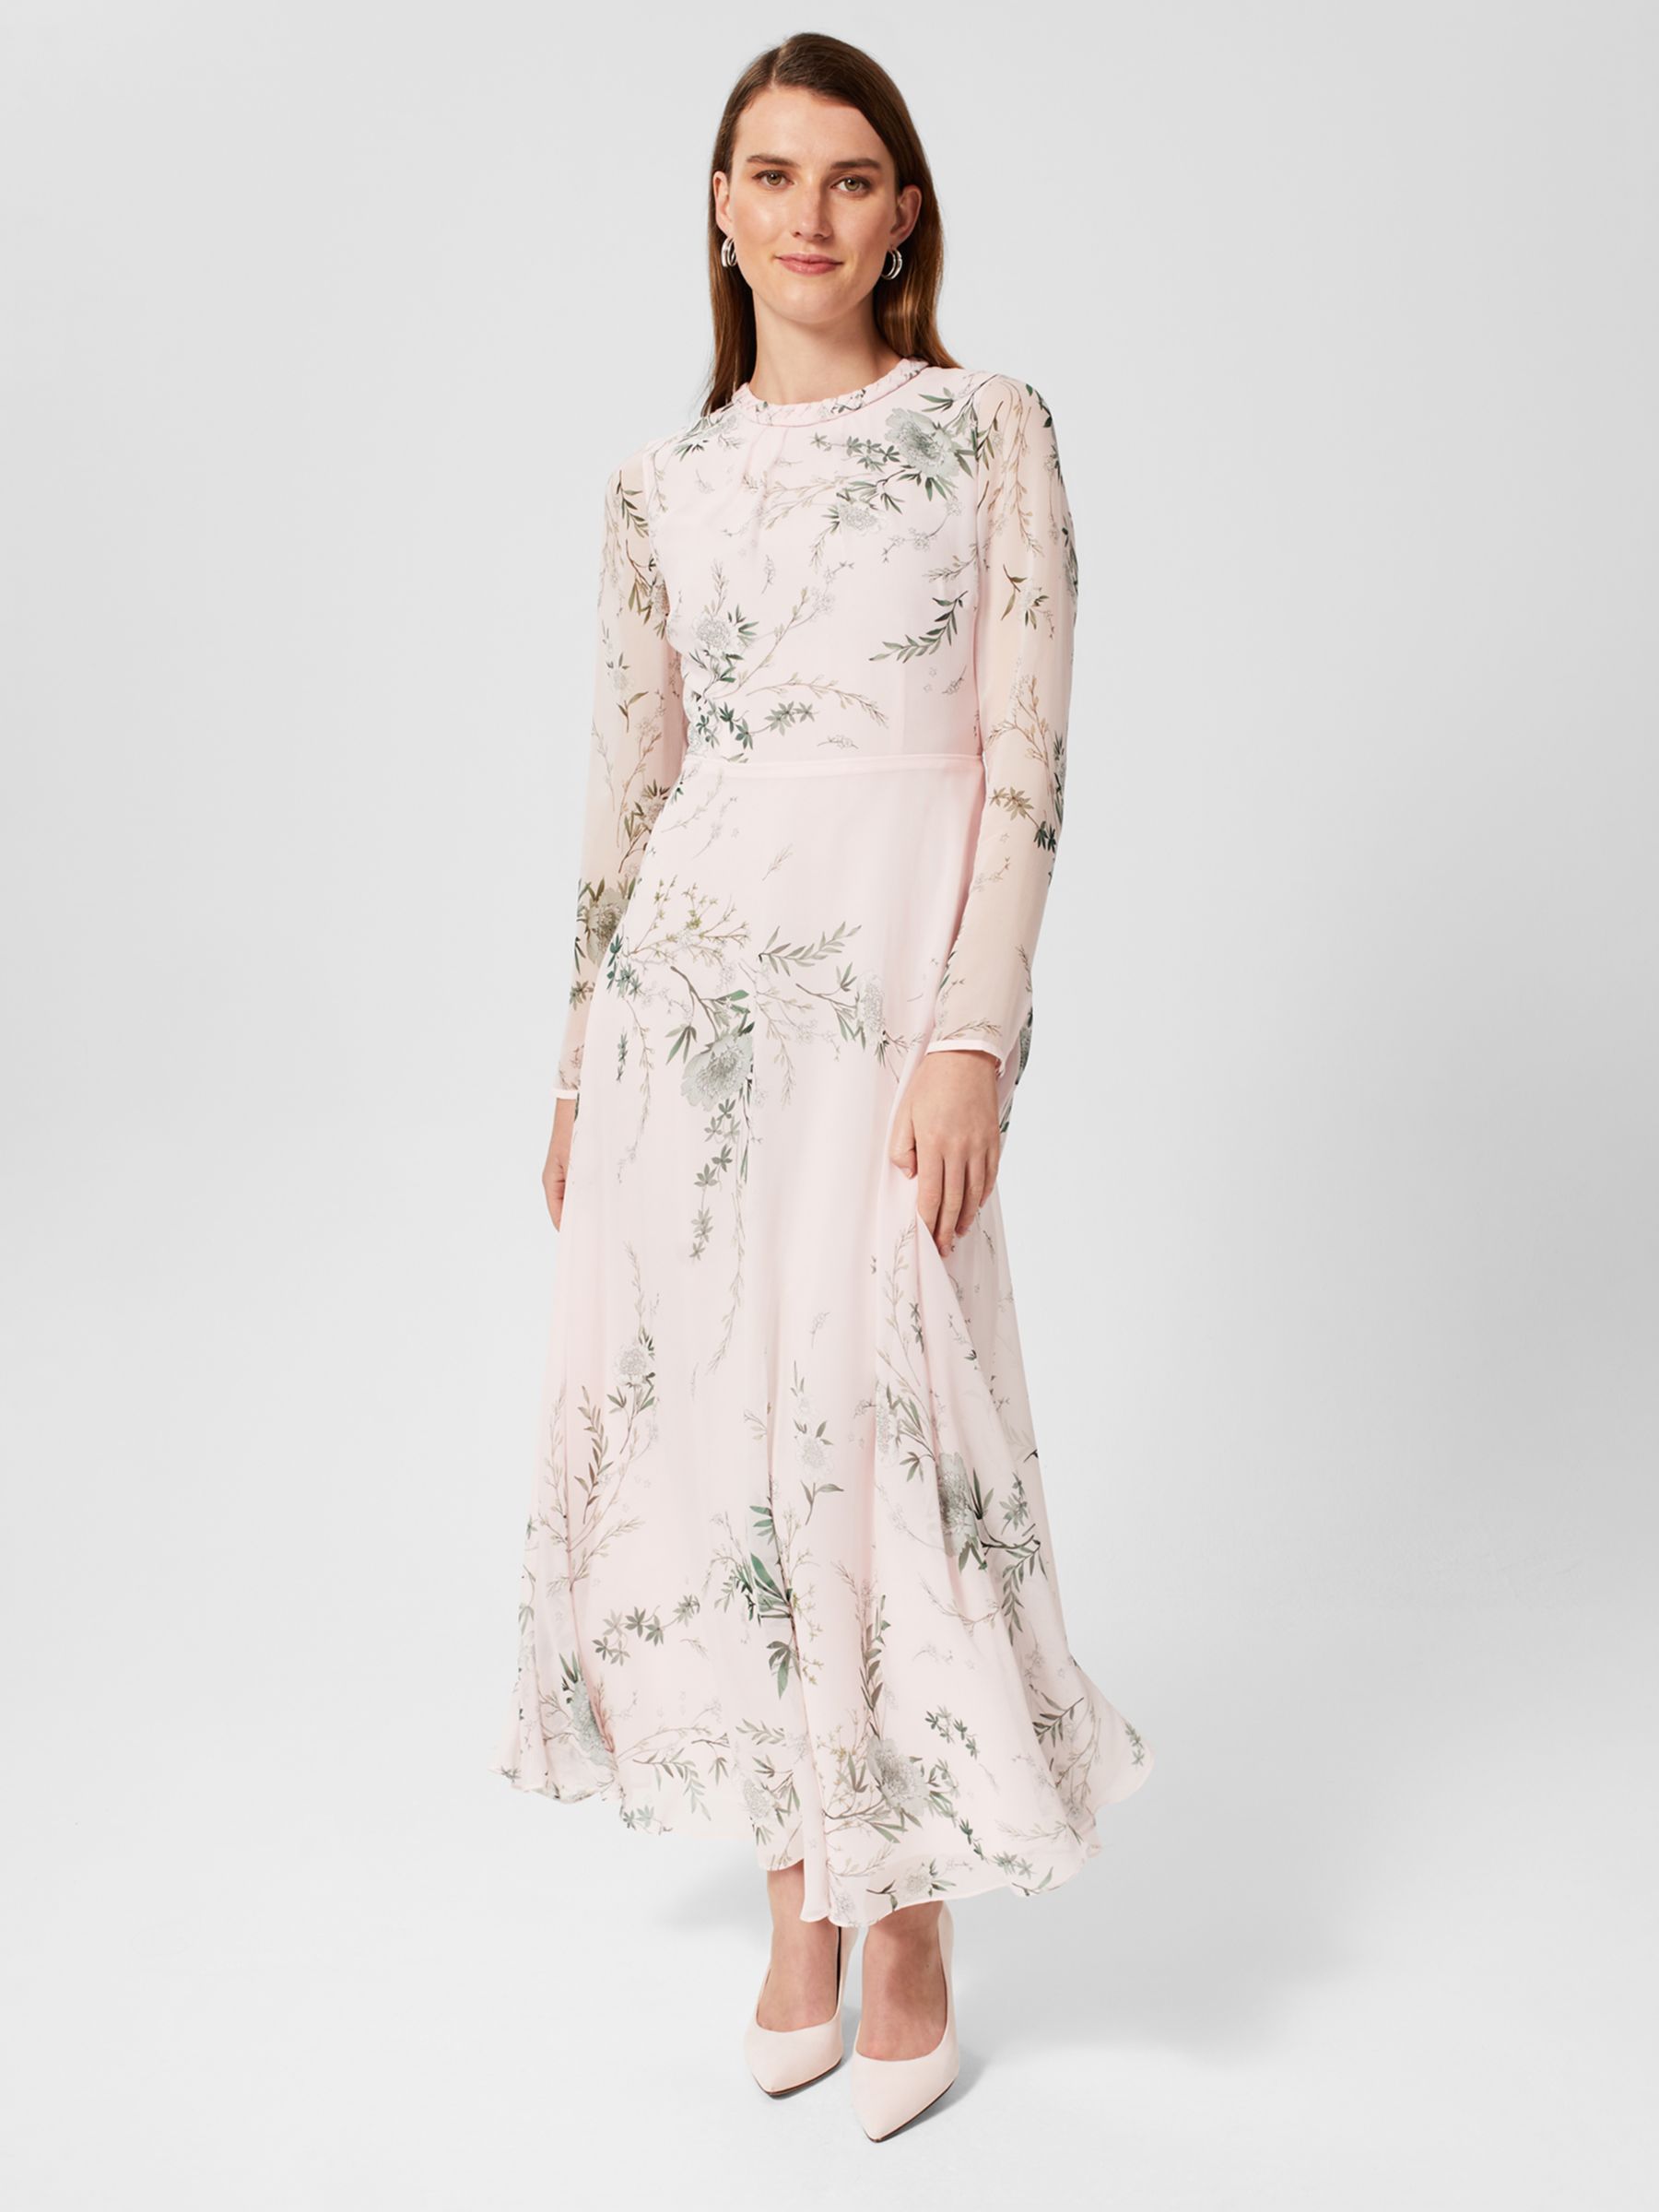 Hobbs Rosabelle Silk Floral Dress, Pale Pink at John Lewis & Partners